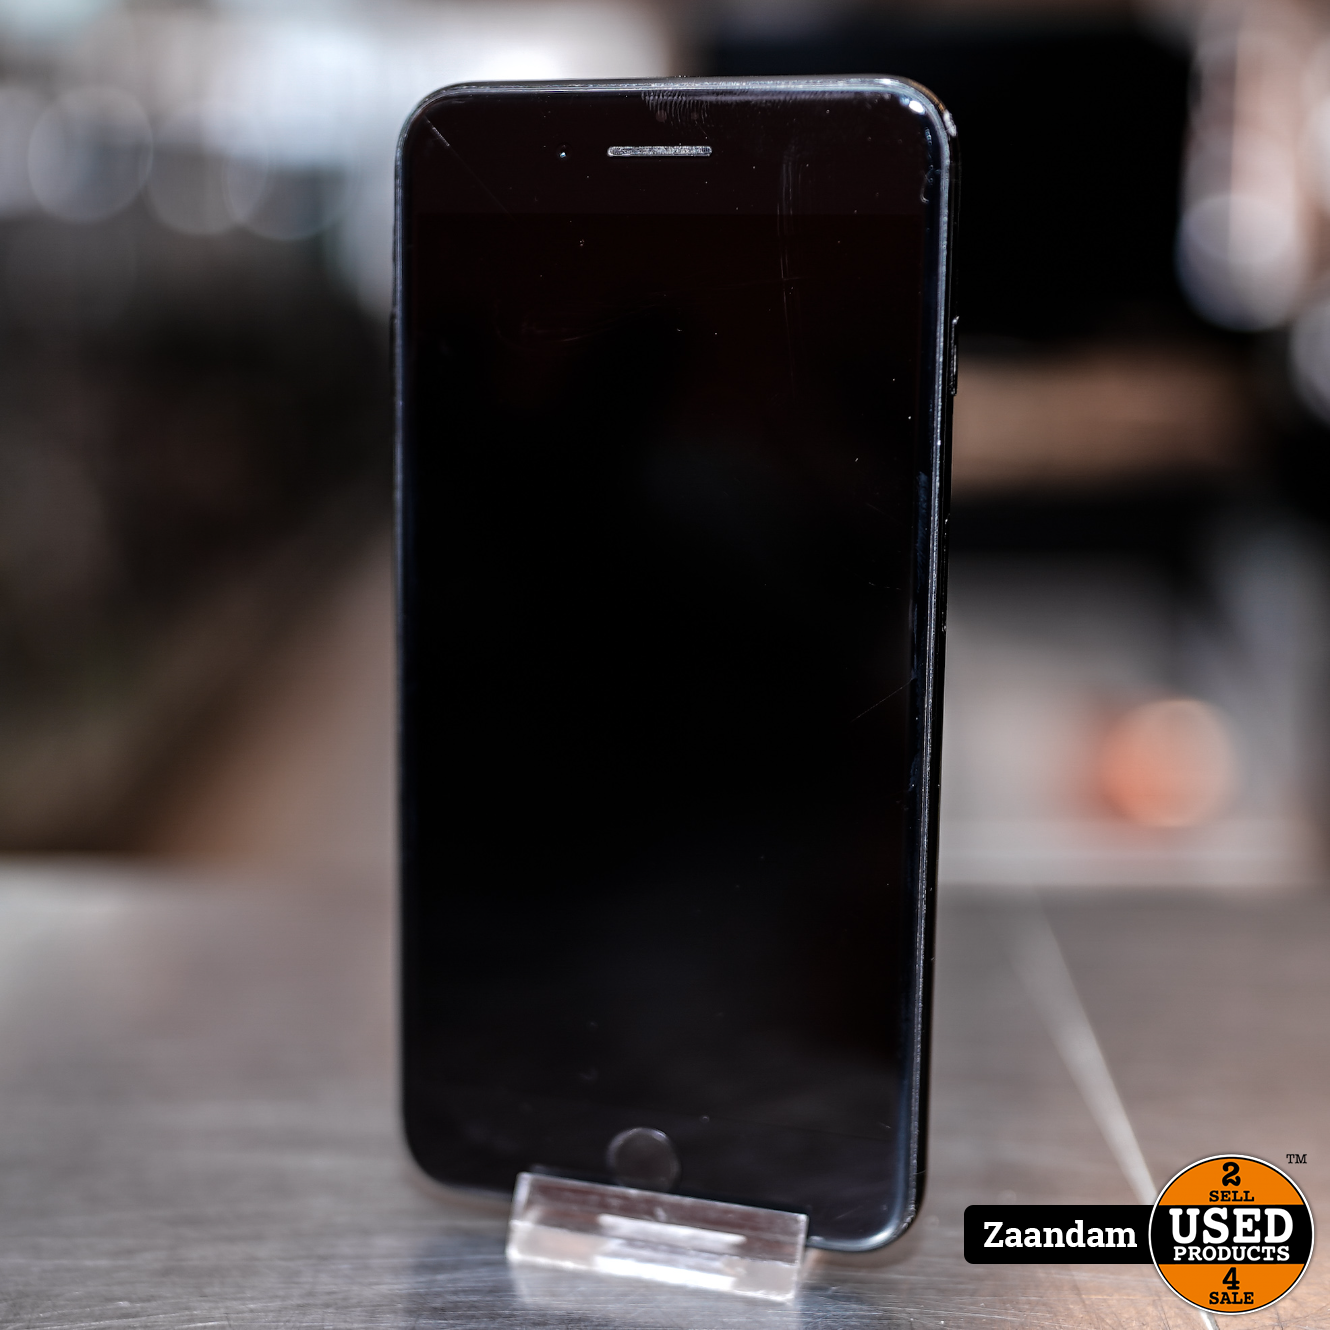 mechanisme Lam Gemengd iPhone 7 Plus 128GB Zwart | Incl. garantie - Used Products Zaandam